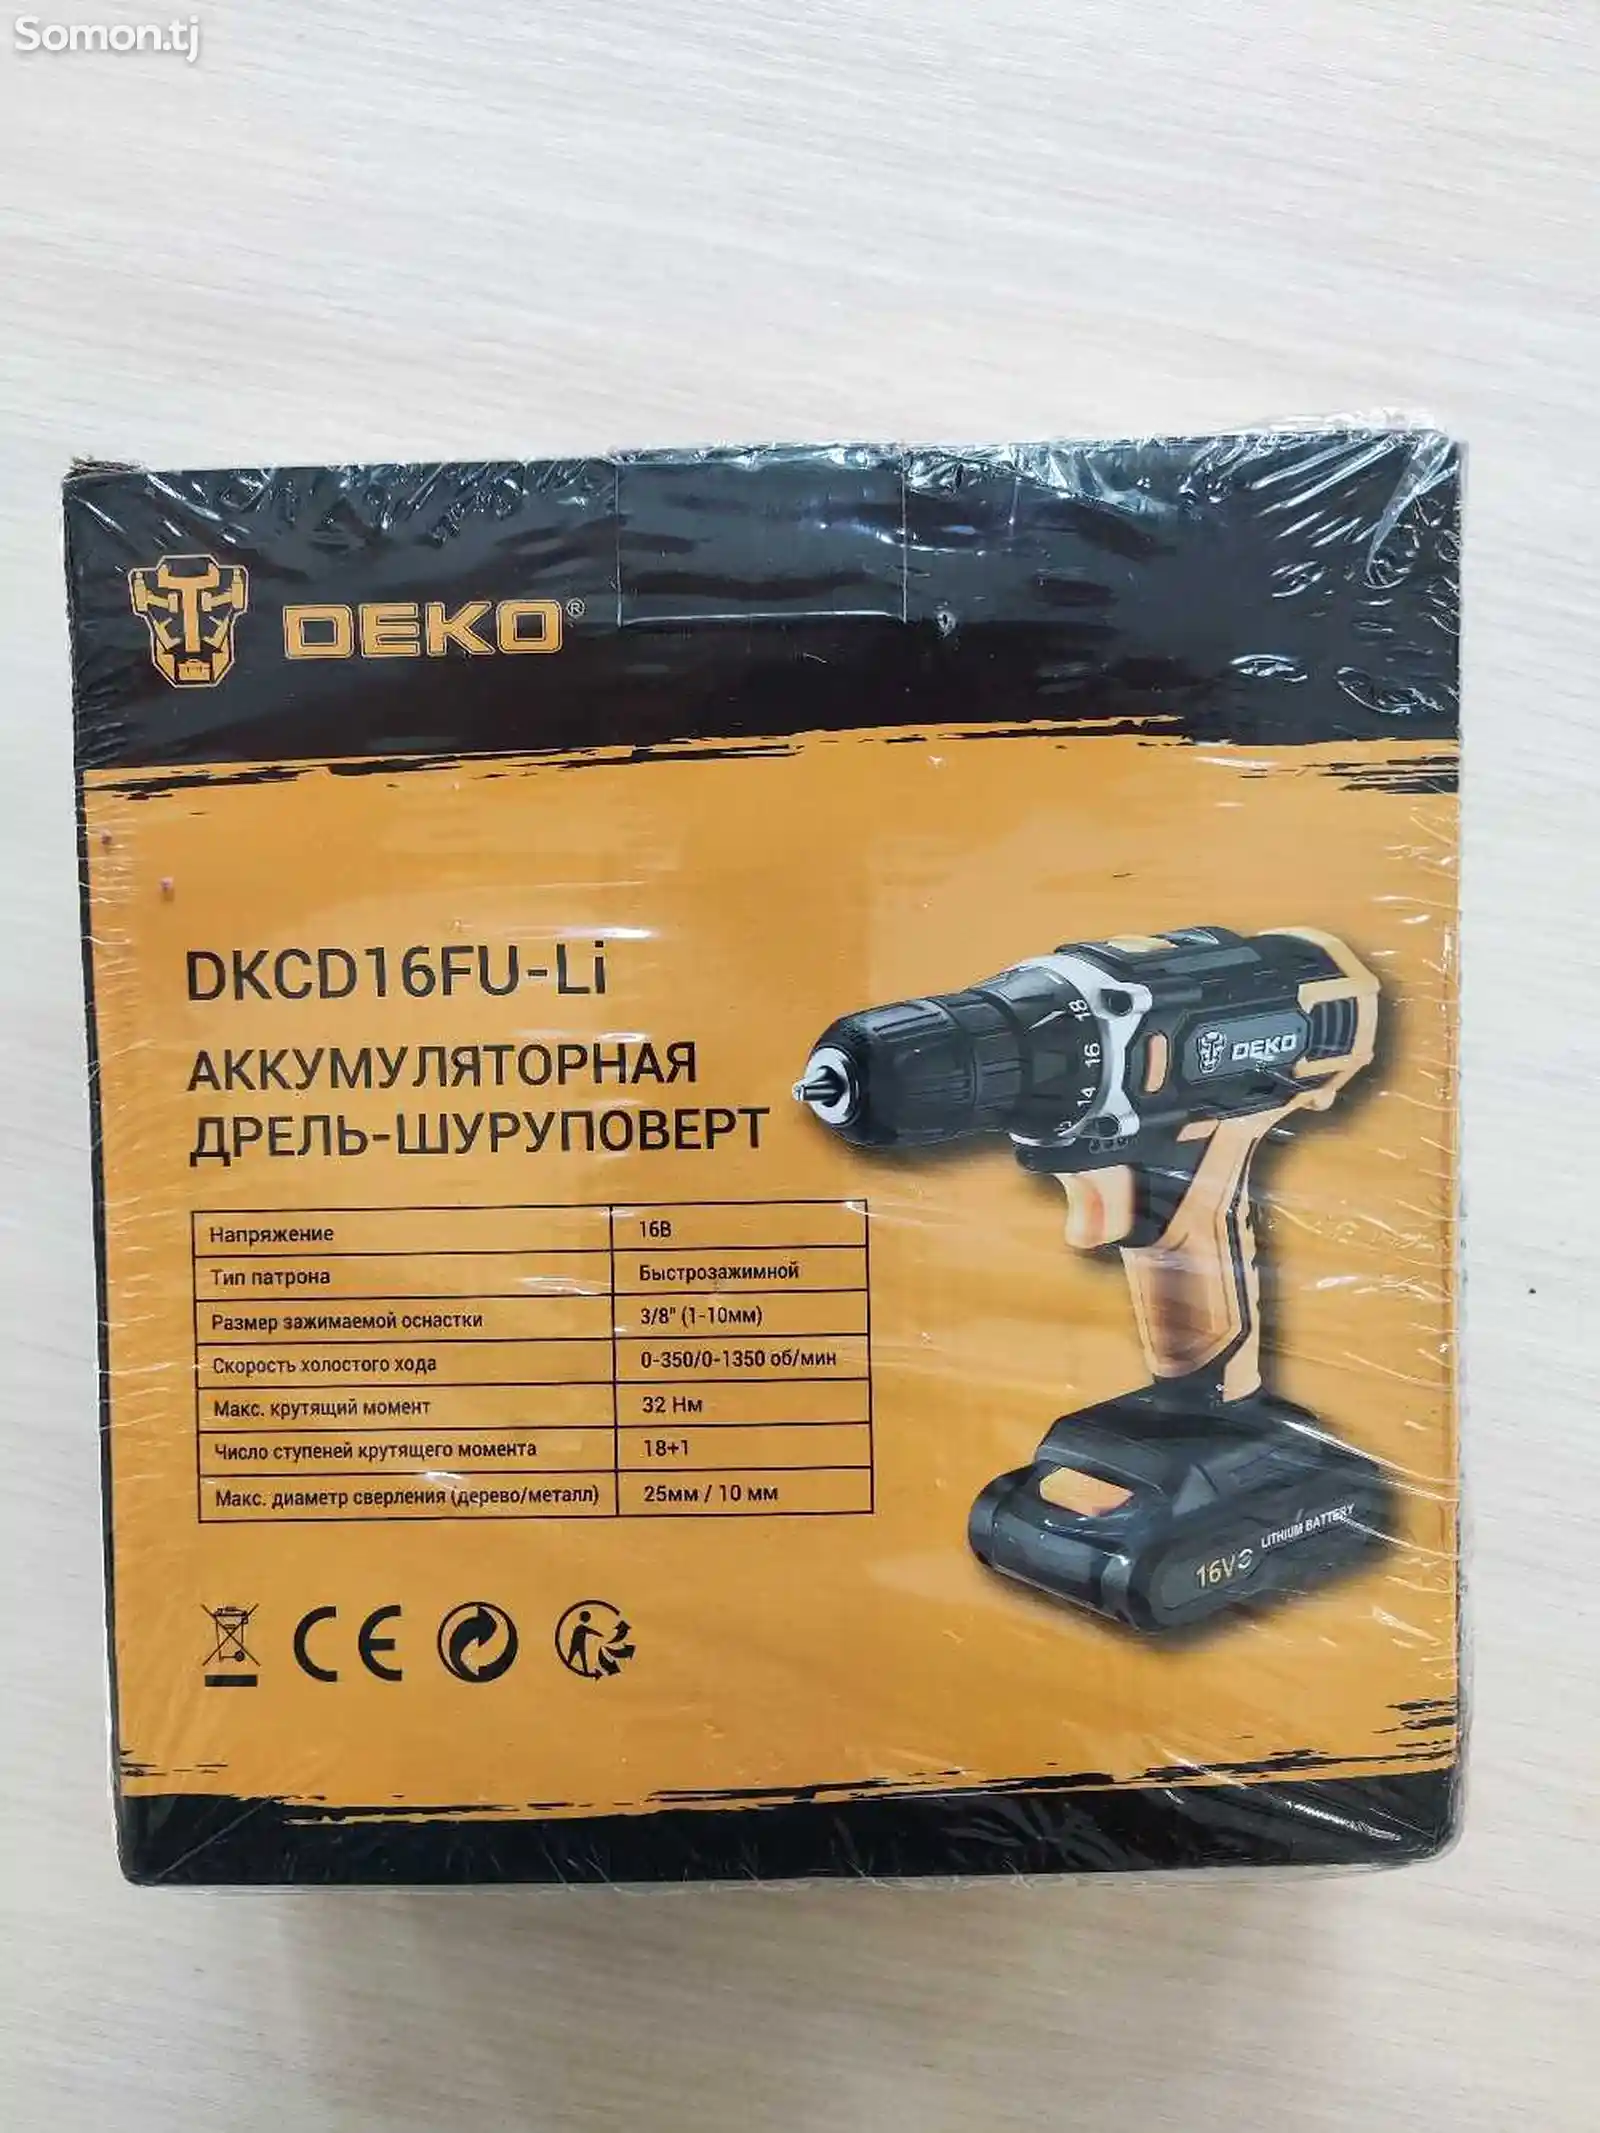 Аккумуляторная дрель шуруповёрт Deko DKCD16FU-Li-1